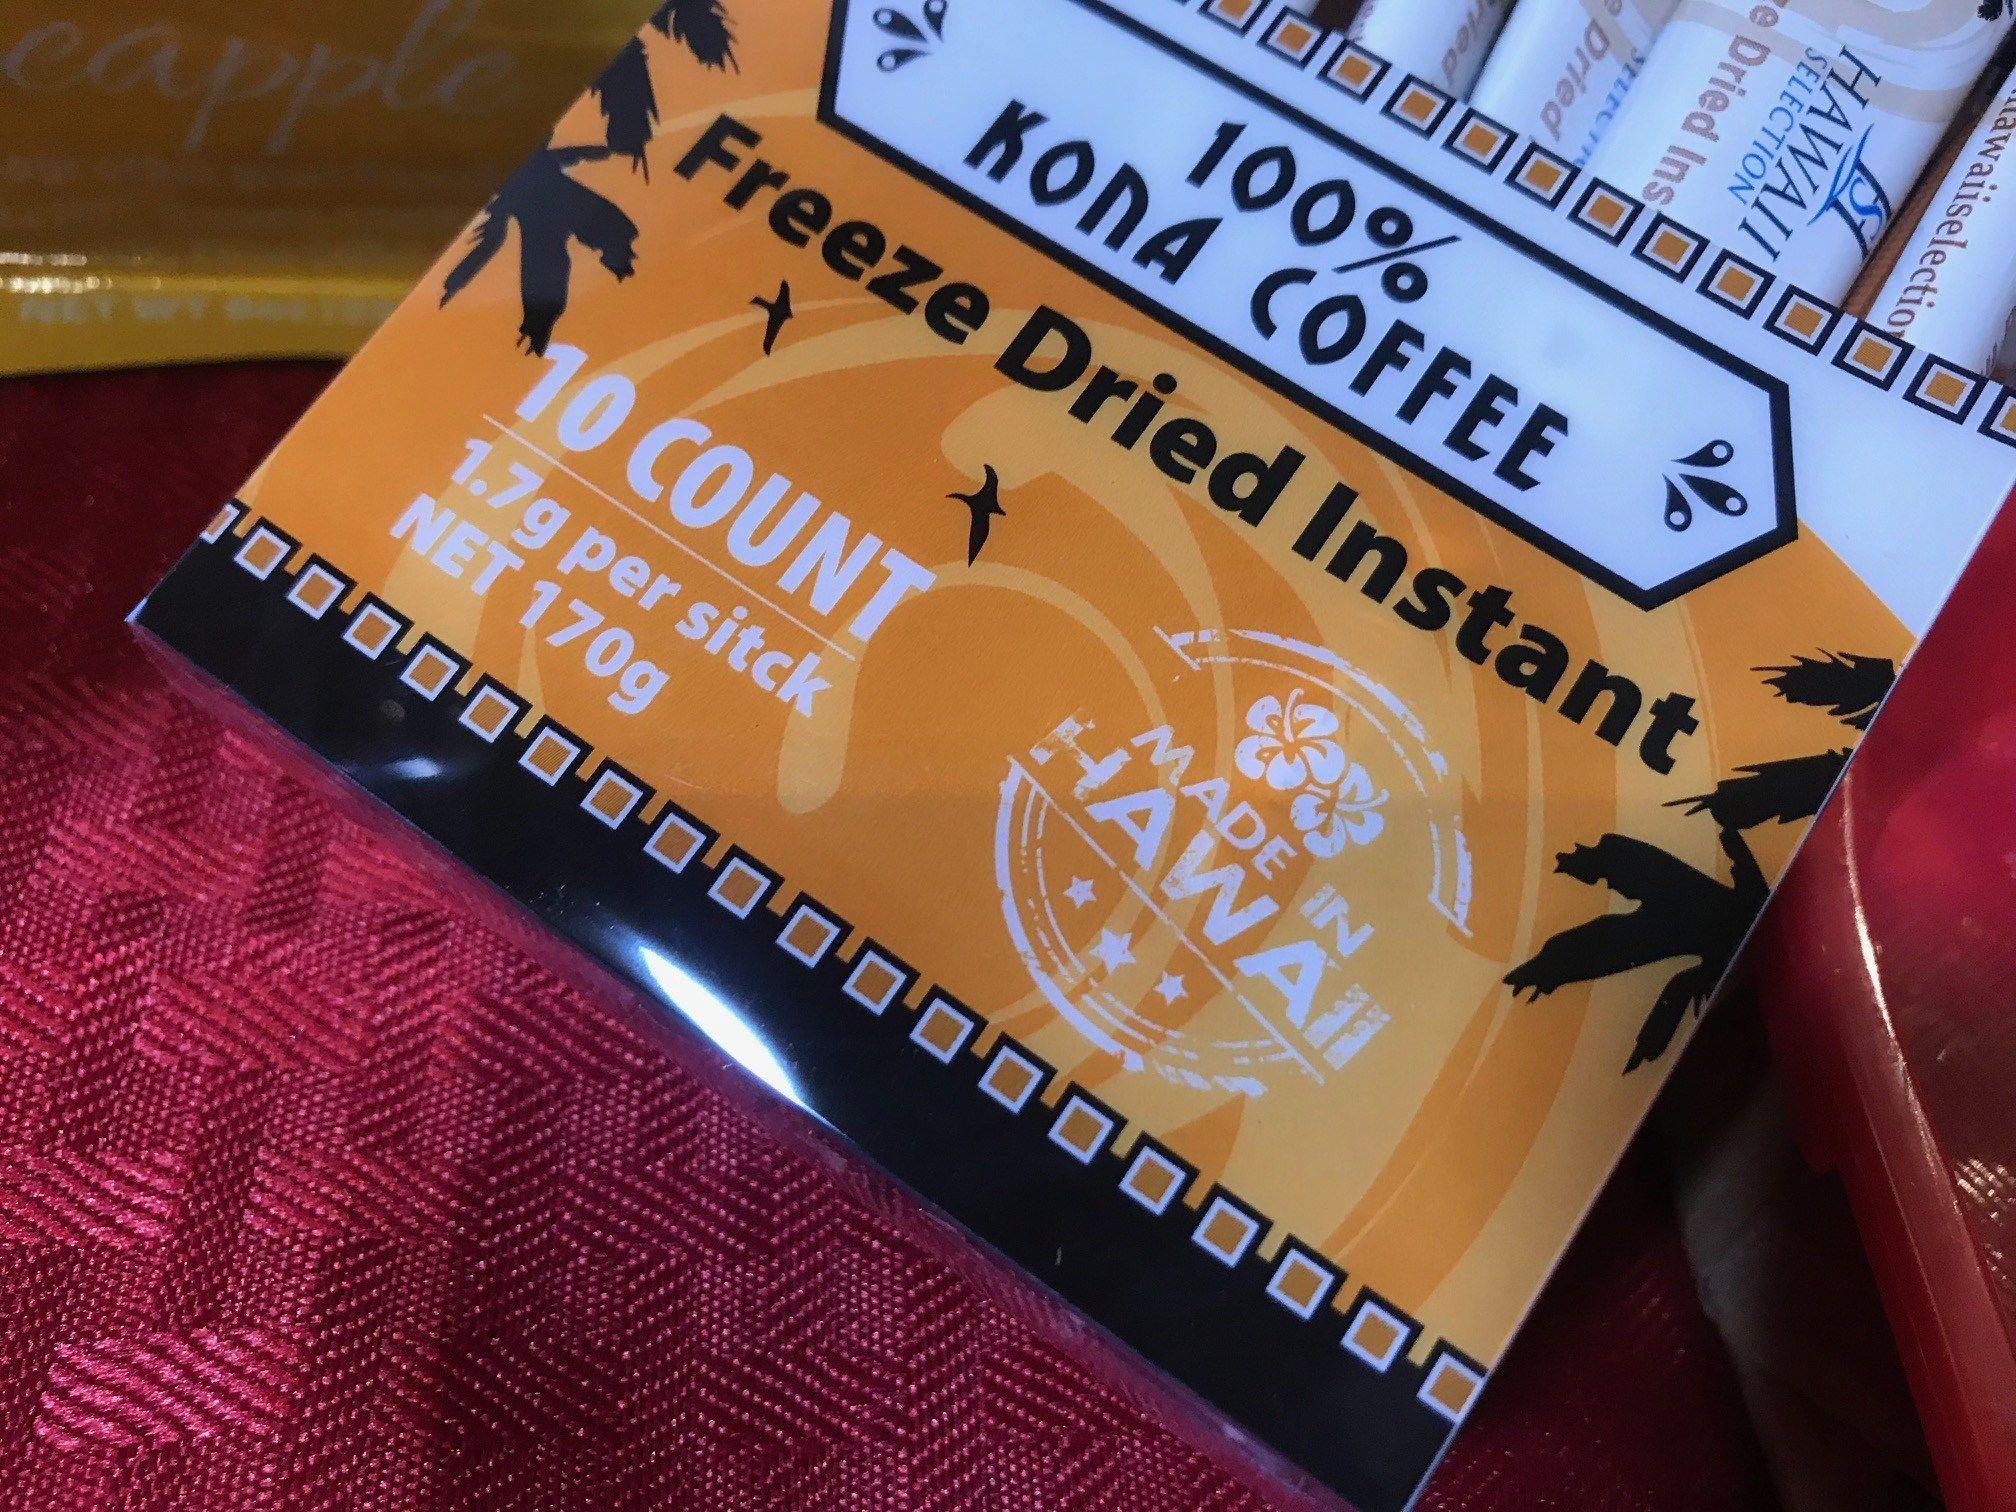 Hawaii Coffee Brand Logo - Cashing in on the 